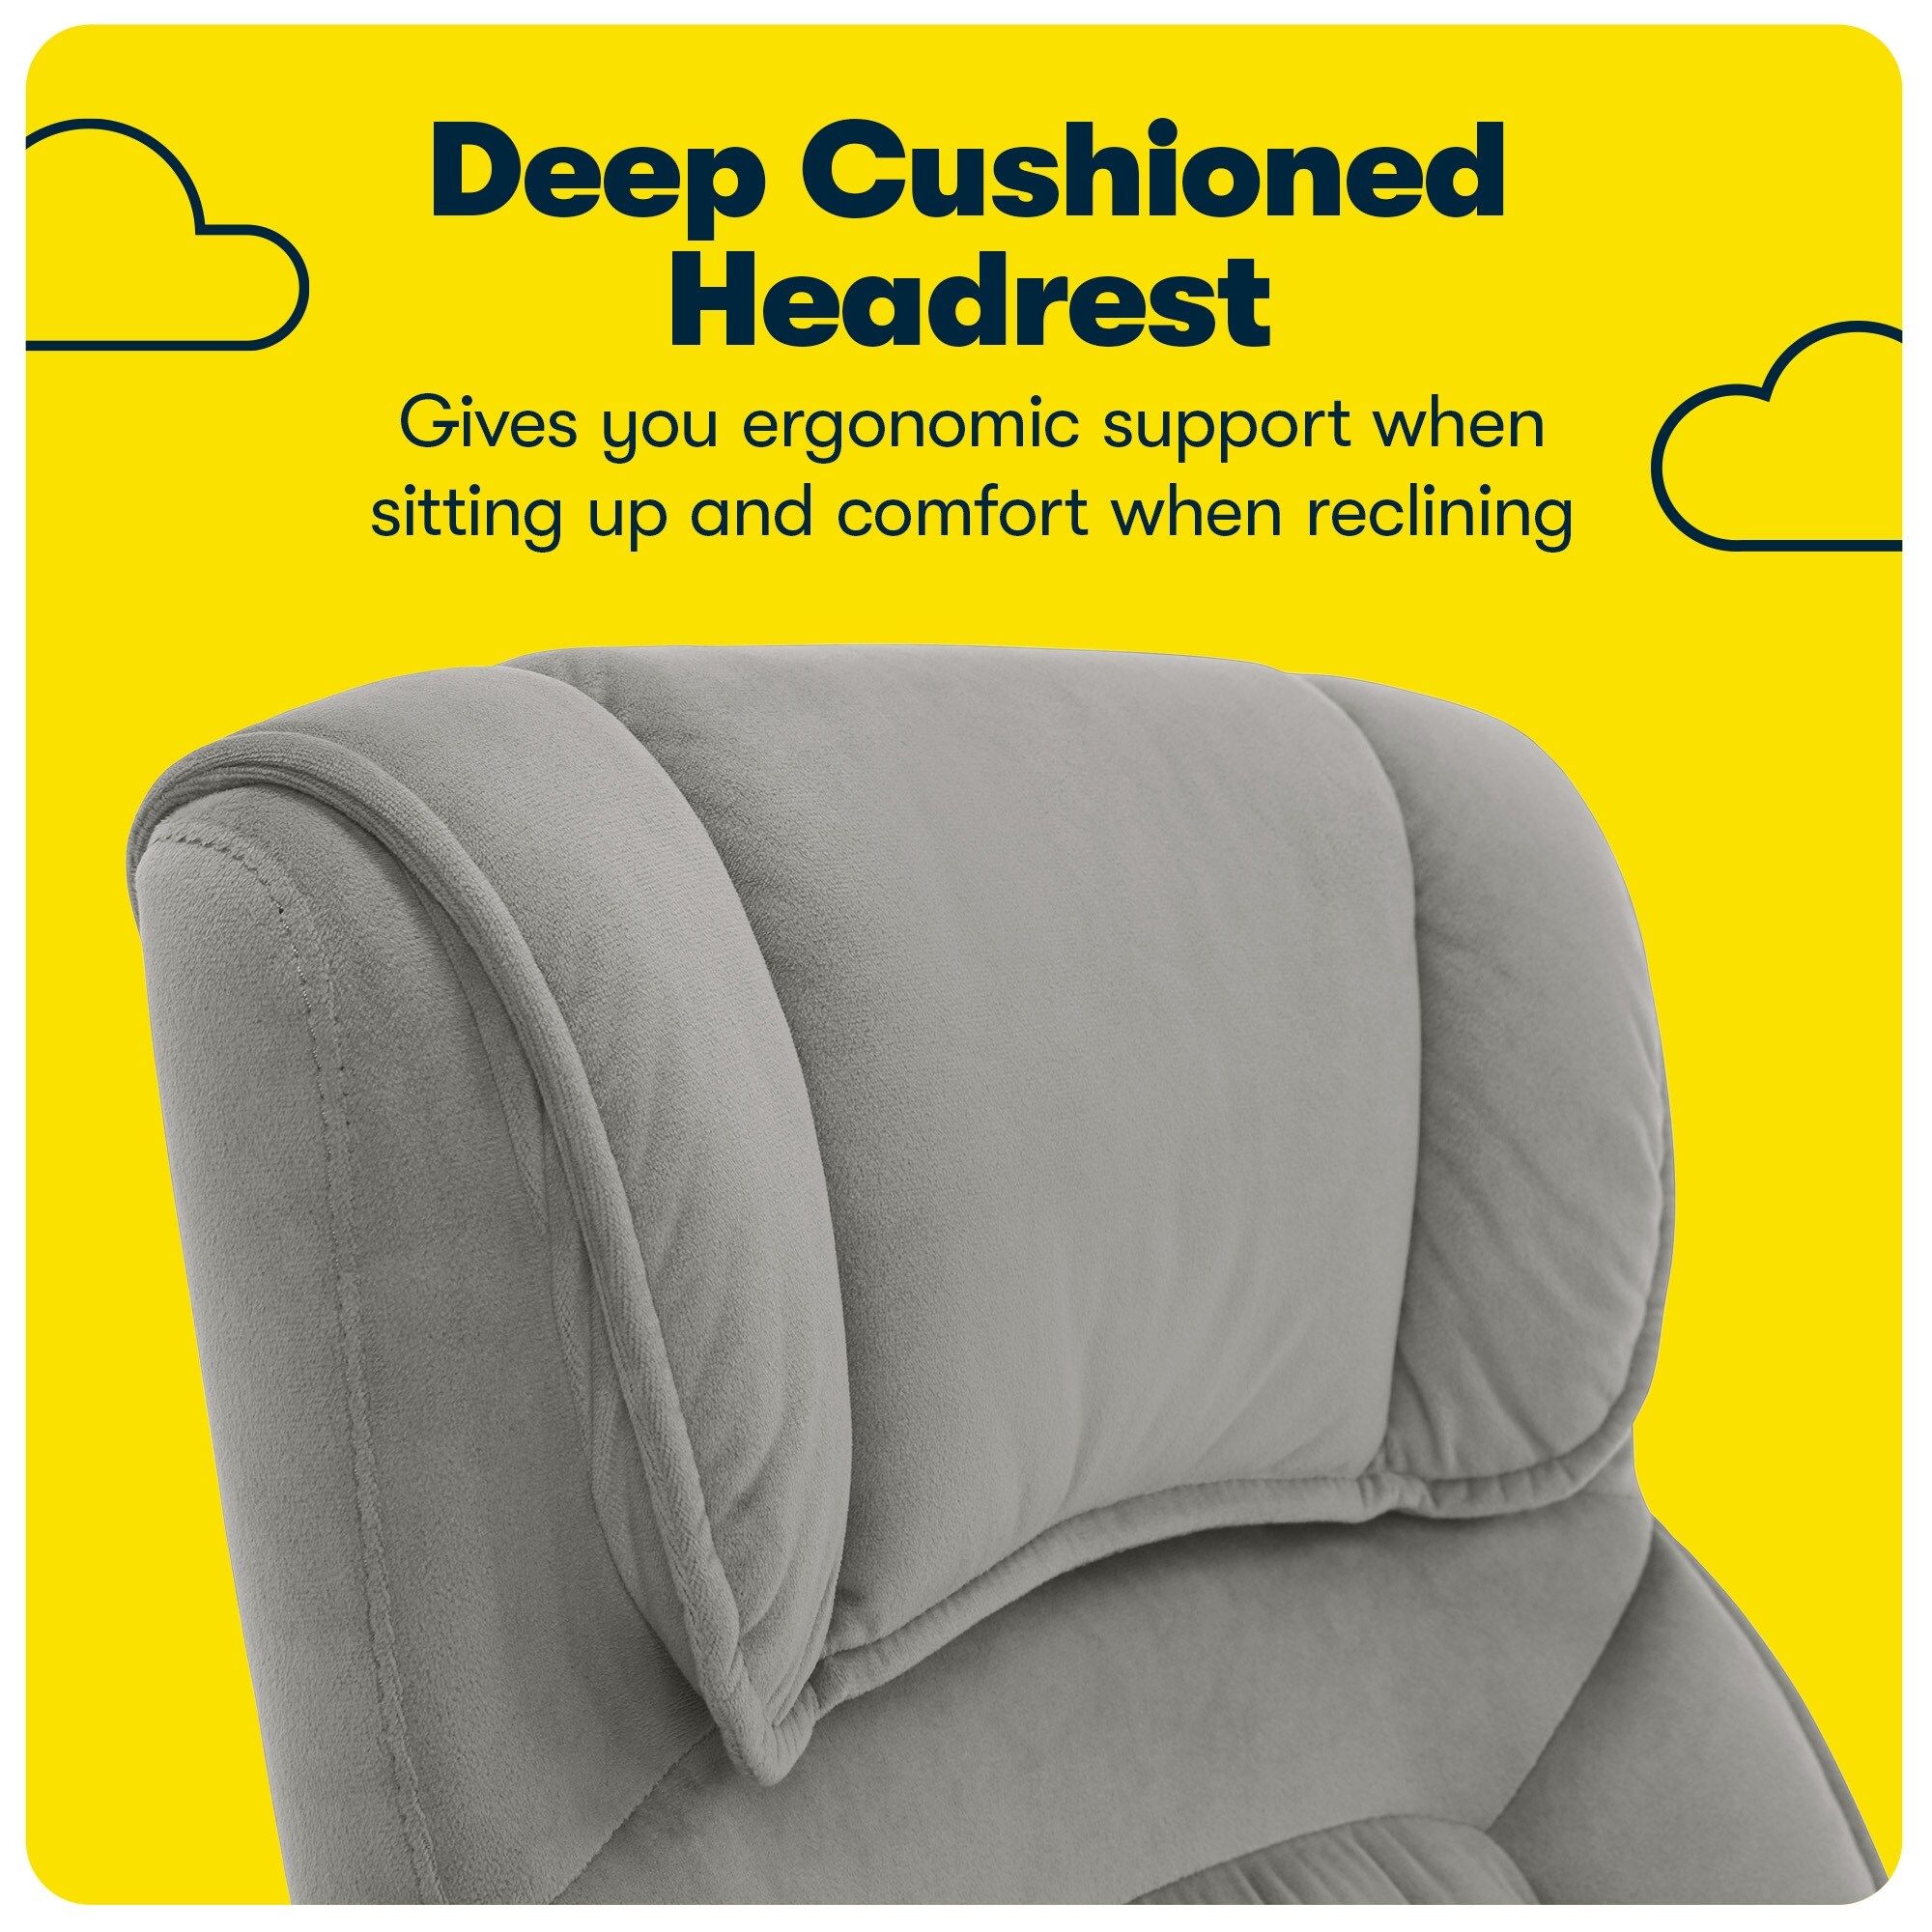 Serta Hannah Microfiber Office Chair with Headrest Pillow Charcoal Gray